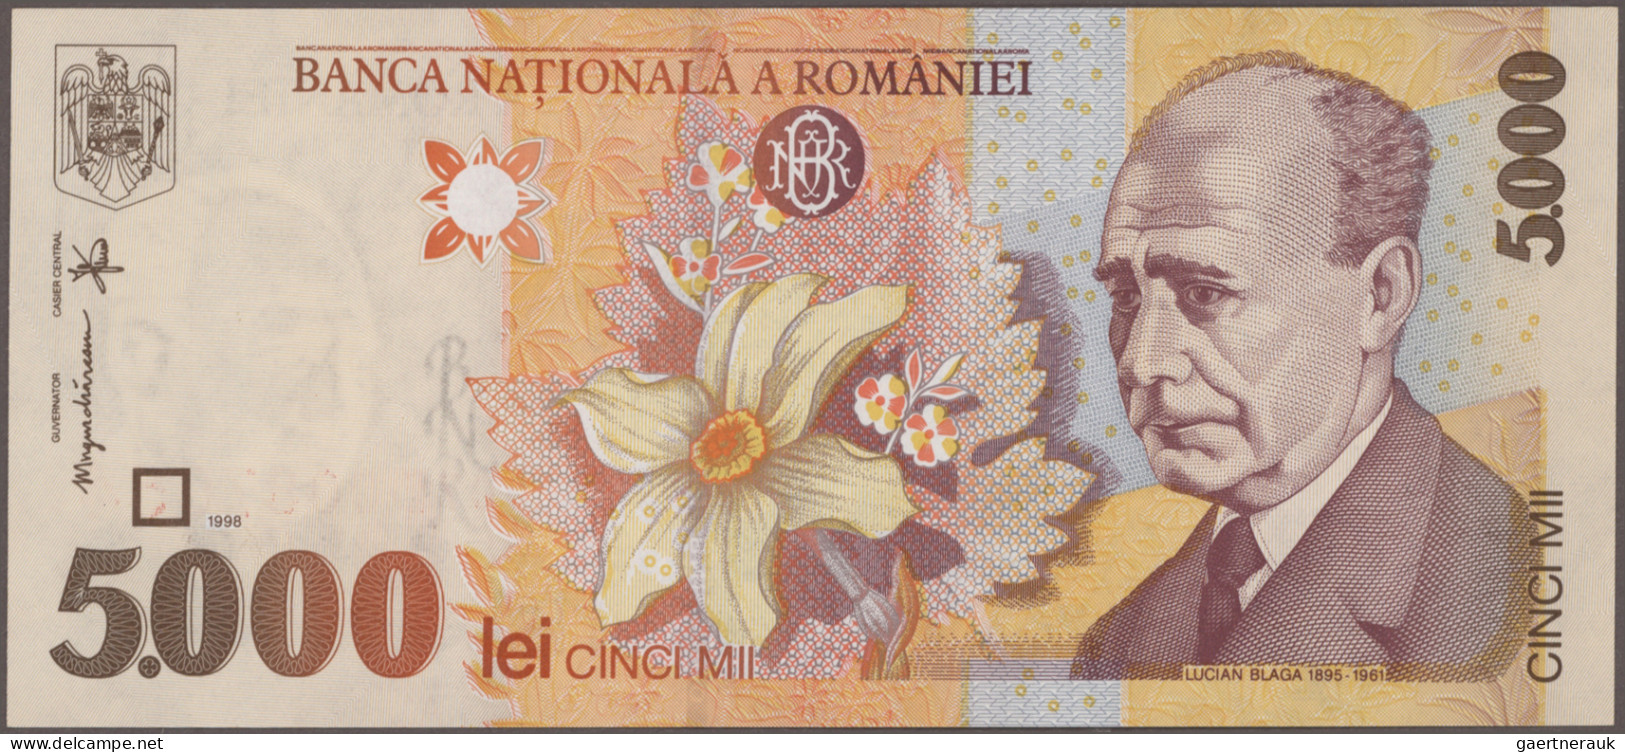 Romania: Lot with 92 banknotes Austria, Moldova and Romania with many duplicates